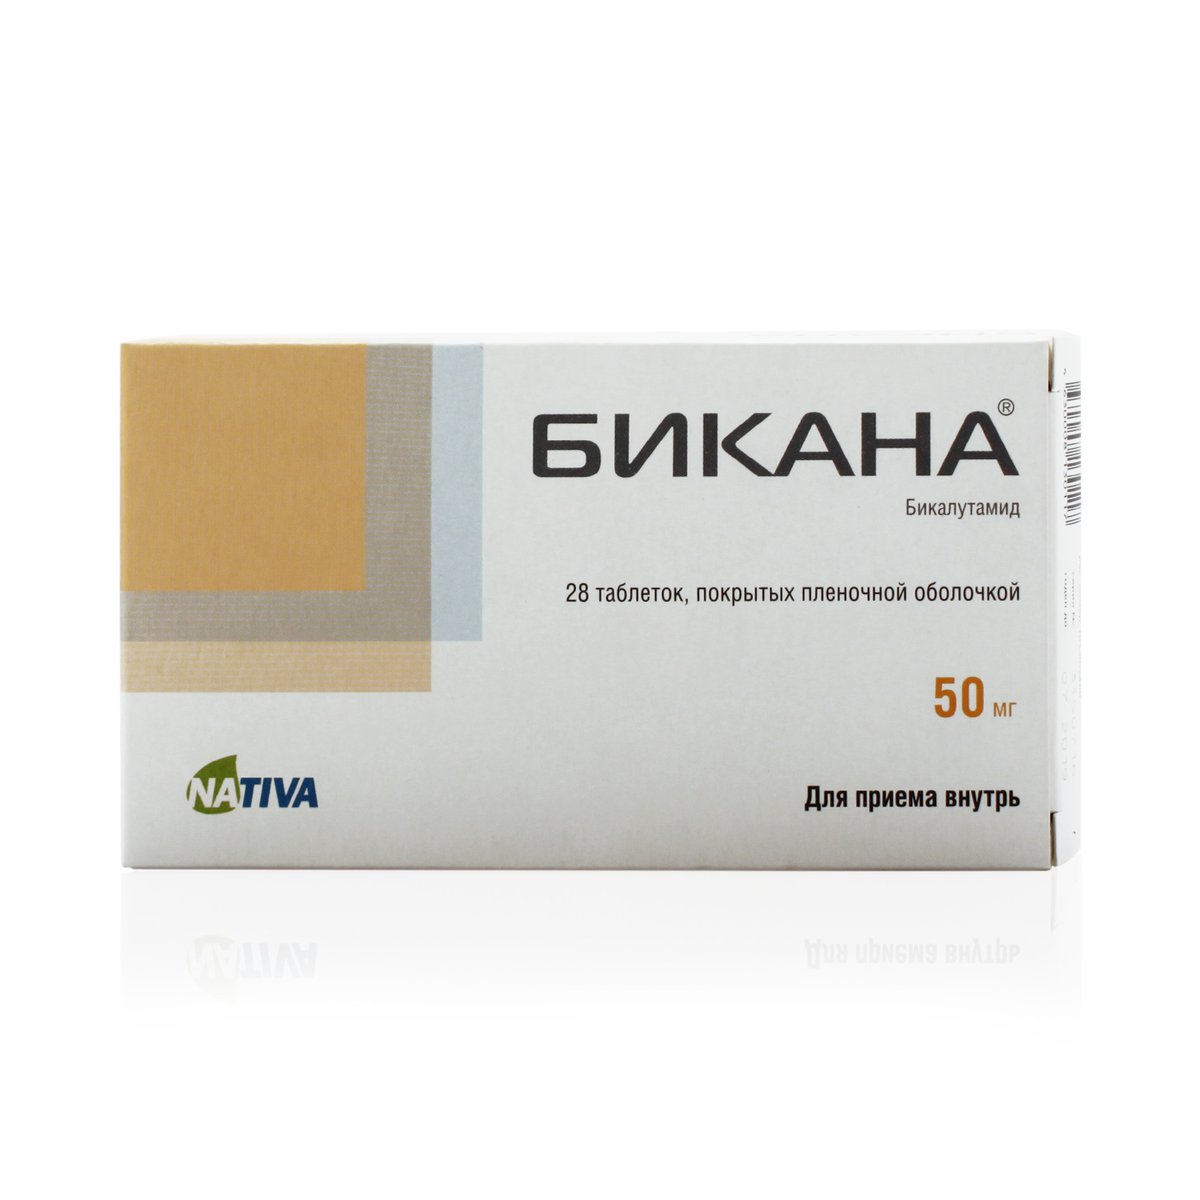 Бикана (таблетки, 28 шт, 50 мг, для приема внутрь) - цена,  .